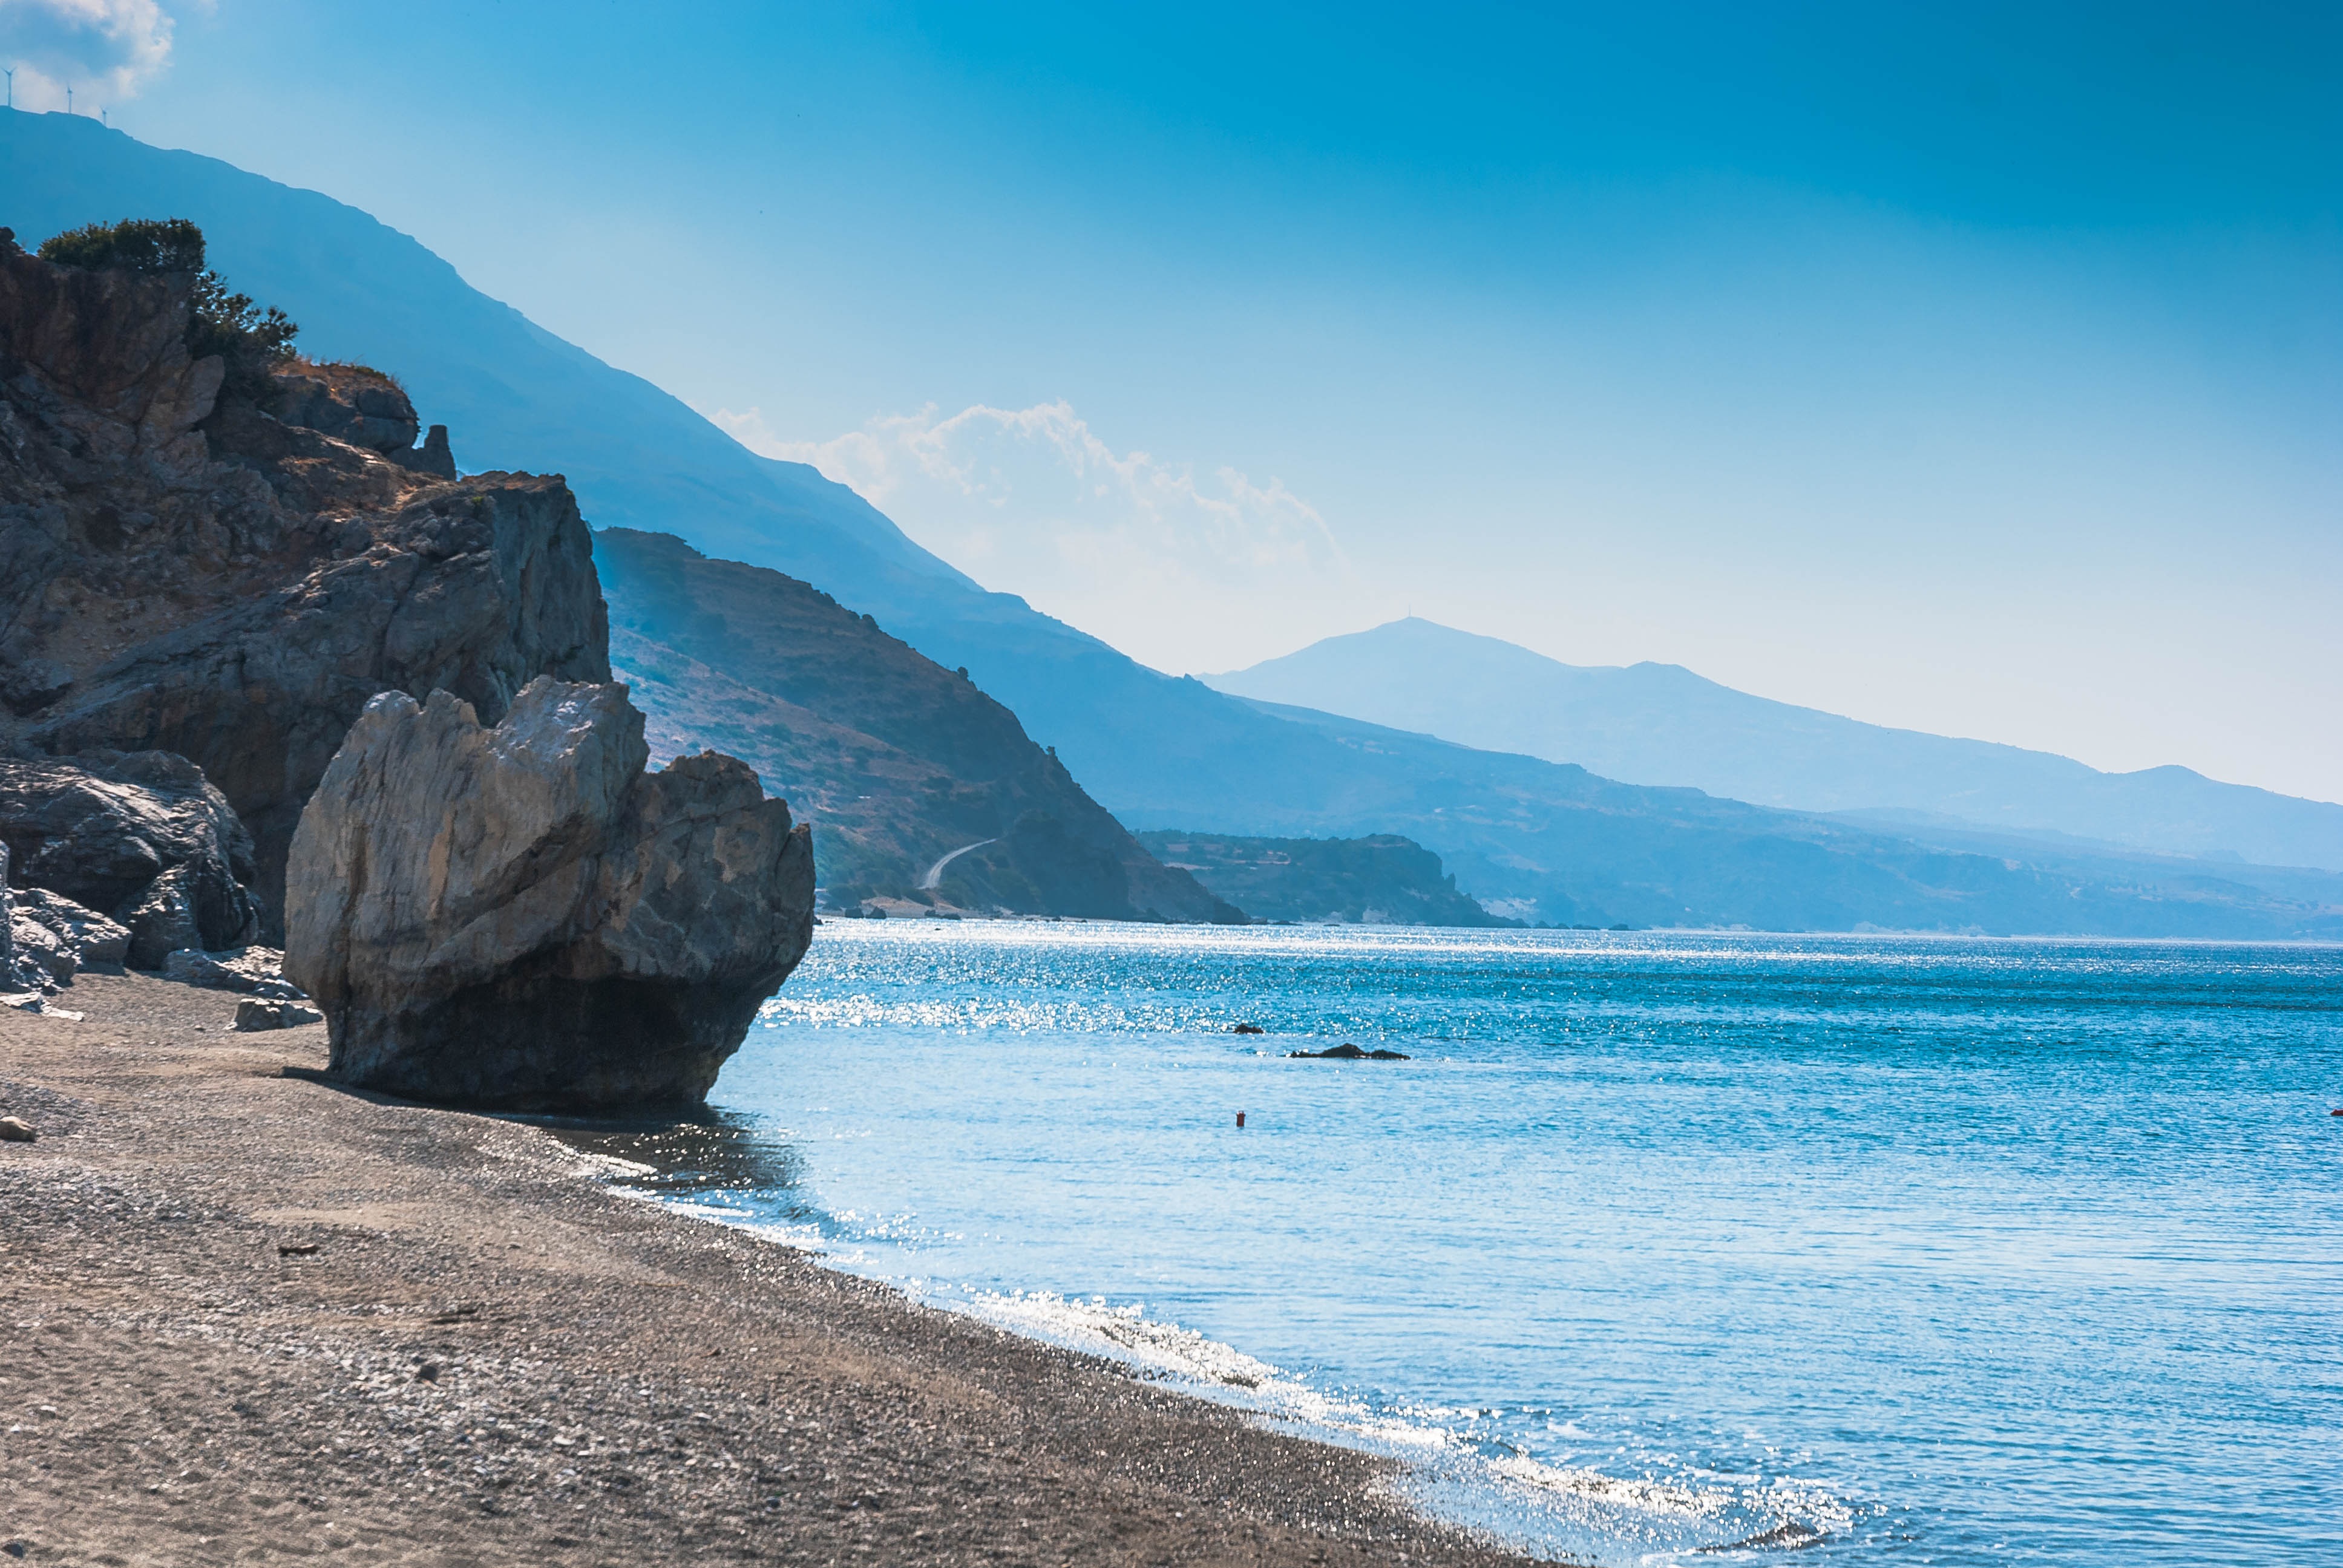 Preveli is a location on the south coast of the Greek island of Crete by jarekgrafik